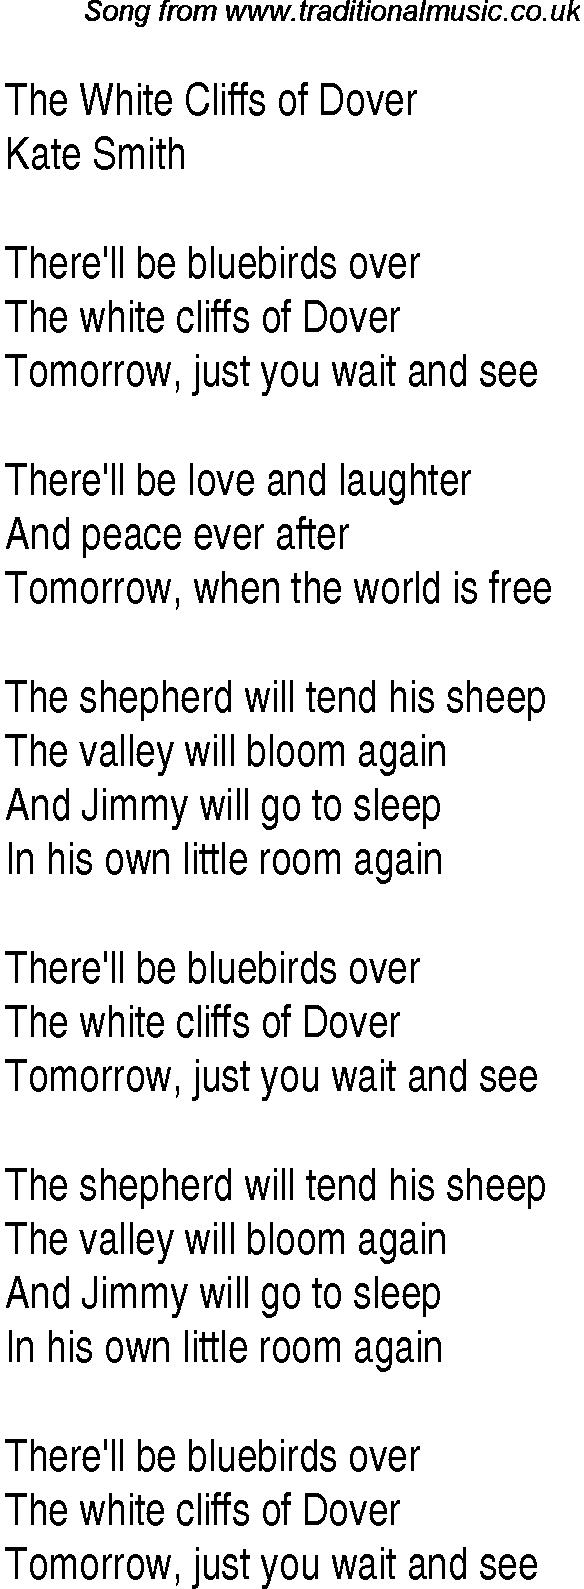 Music charts top songs 1942 - lyrics for White Cliffs Of Doverks